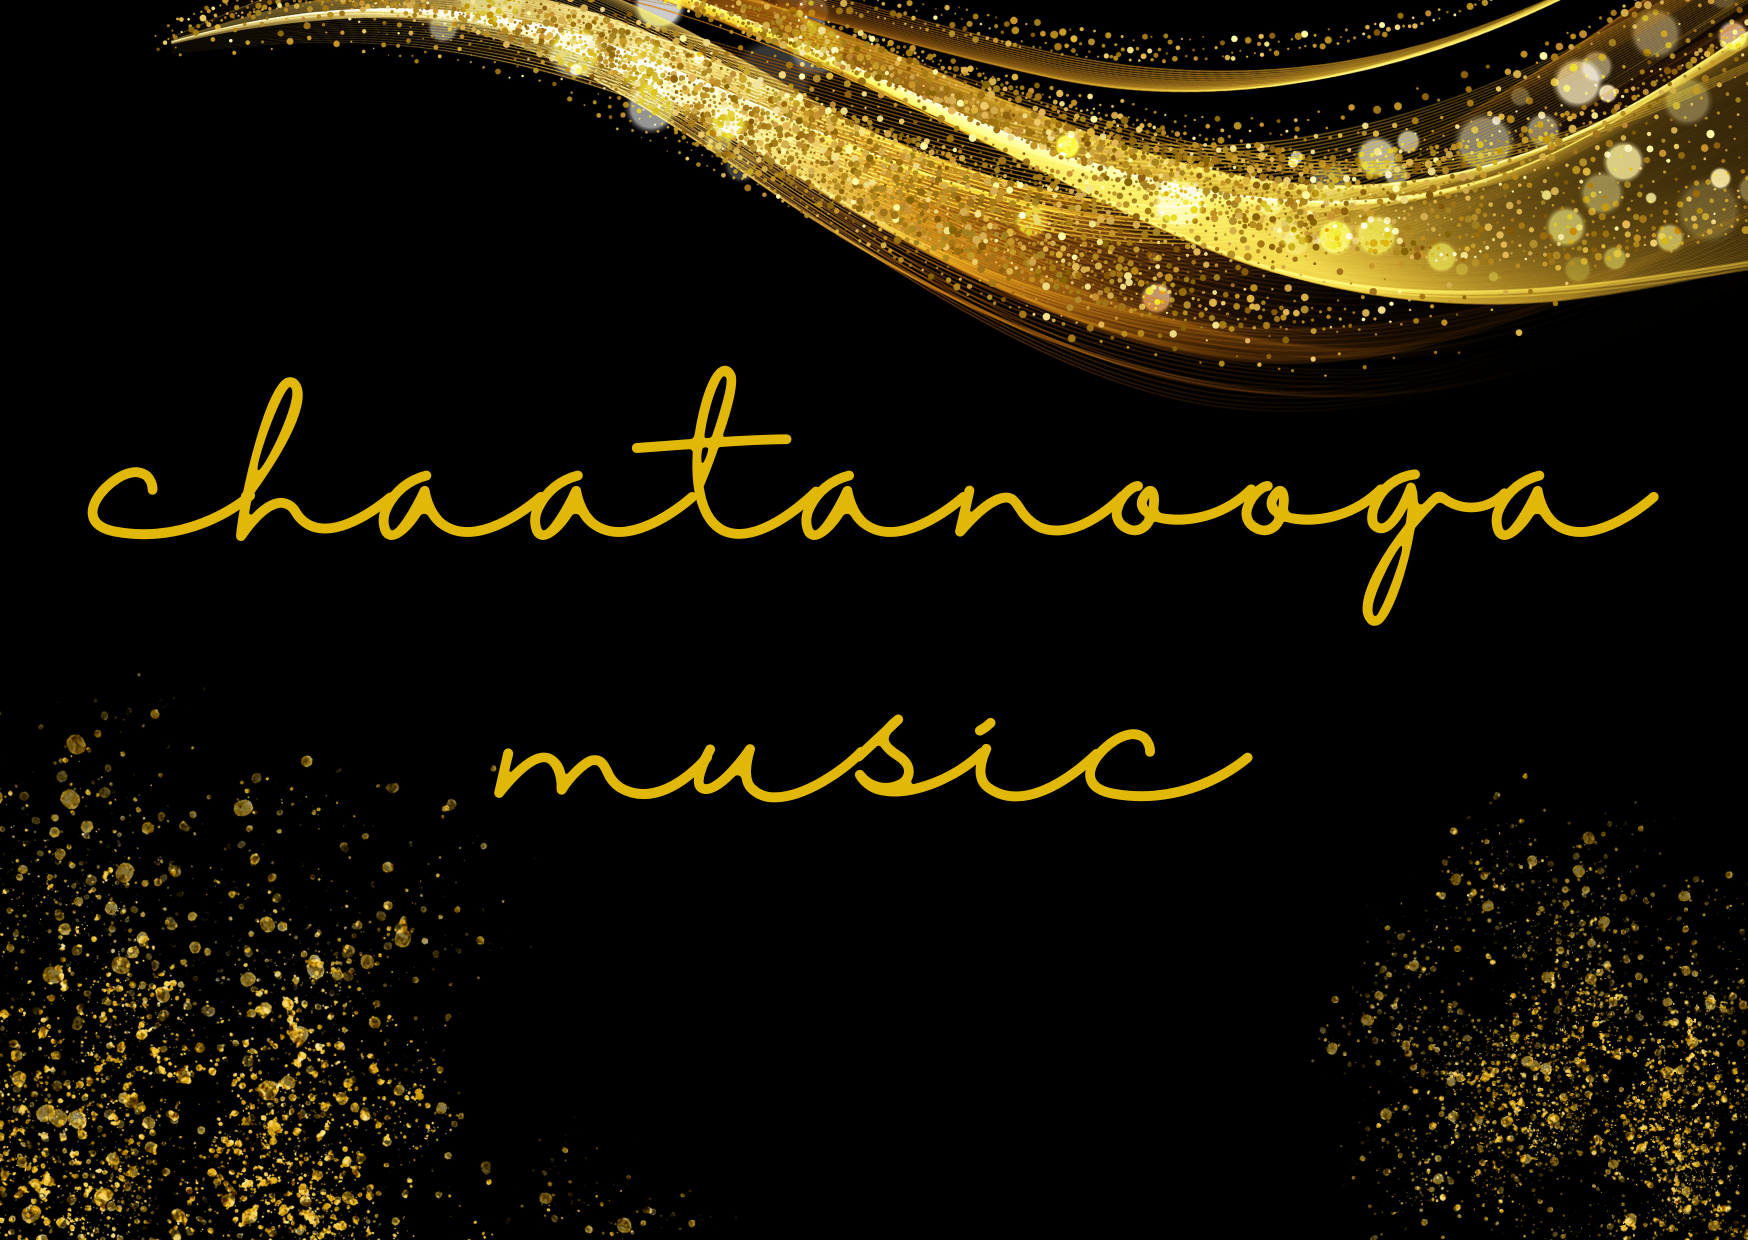 Chattanooga Music - Informasi Terkait Perjudian Slot Online Indonesia